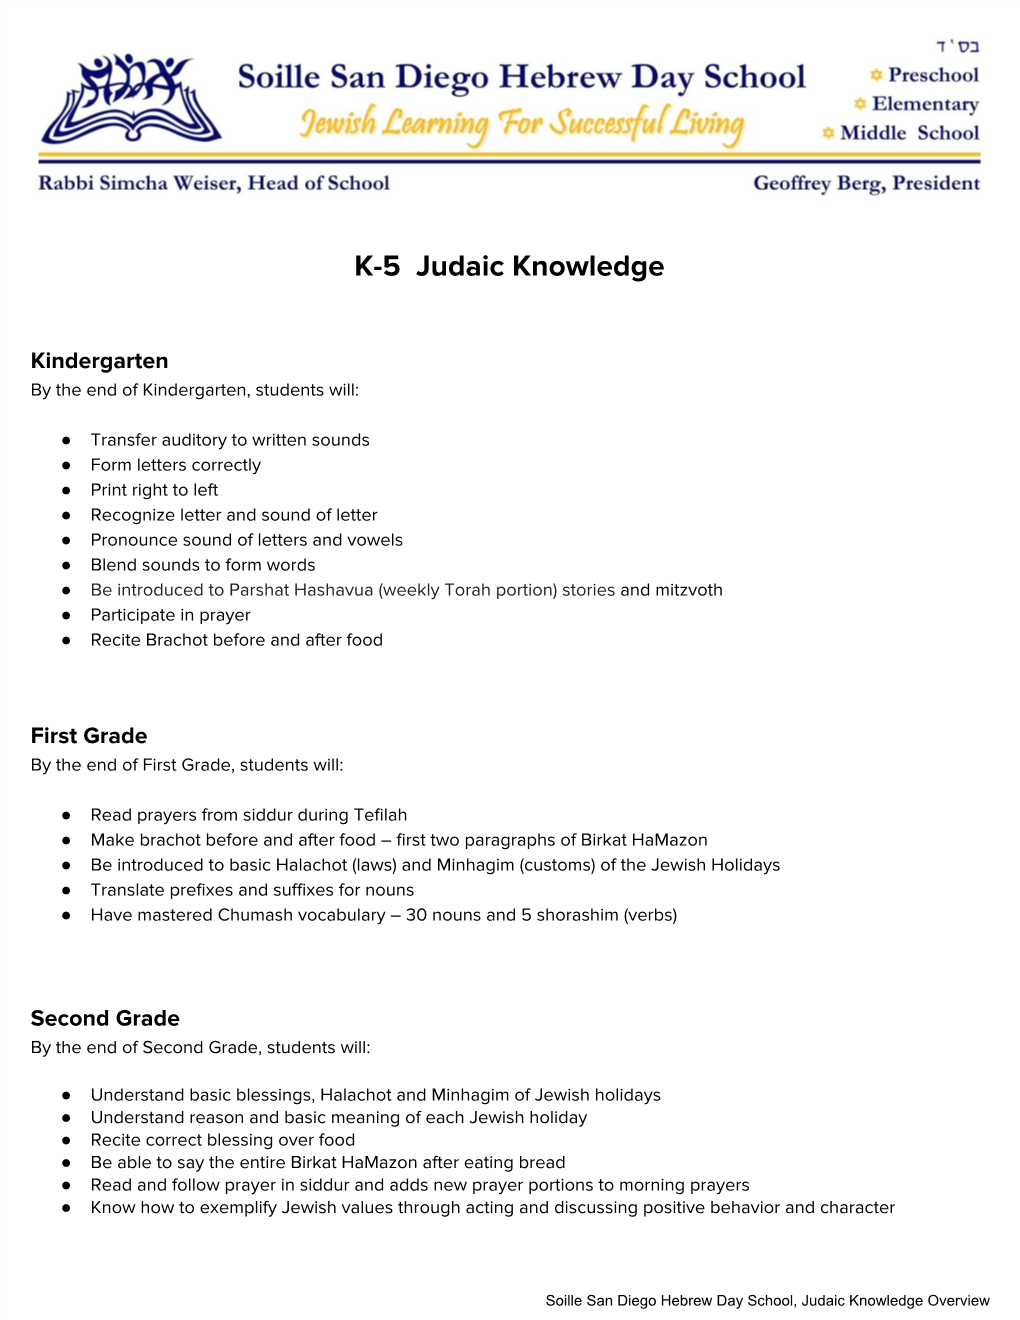 K-5 Judaic Knowledge